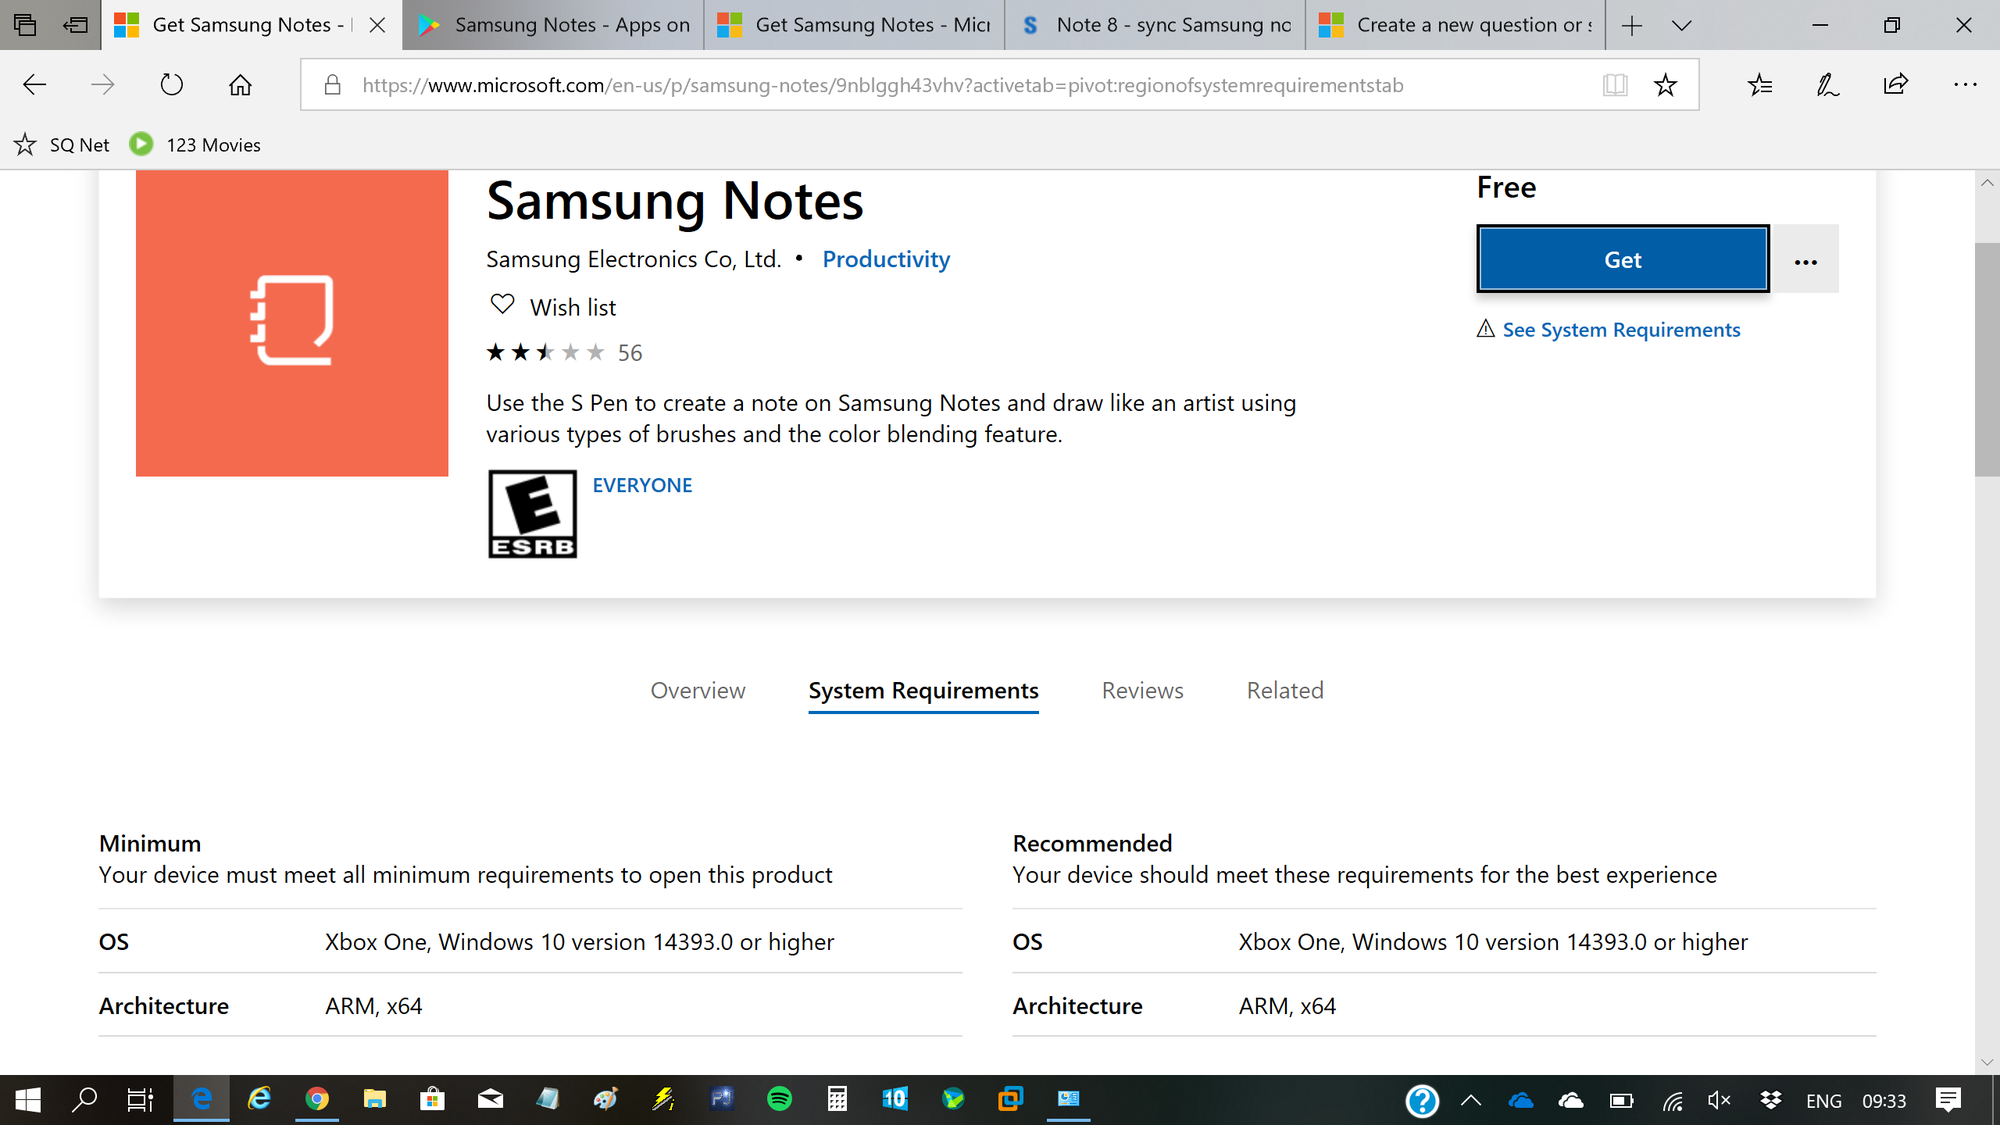 Samsung Notes App on microsoft store 812a070a-536b-4da8-b1eb-f4de654cfa9e?upload=true.png